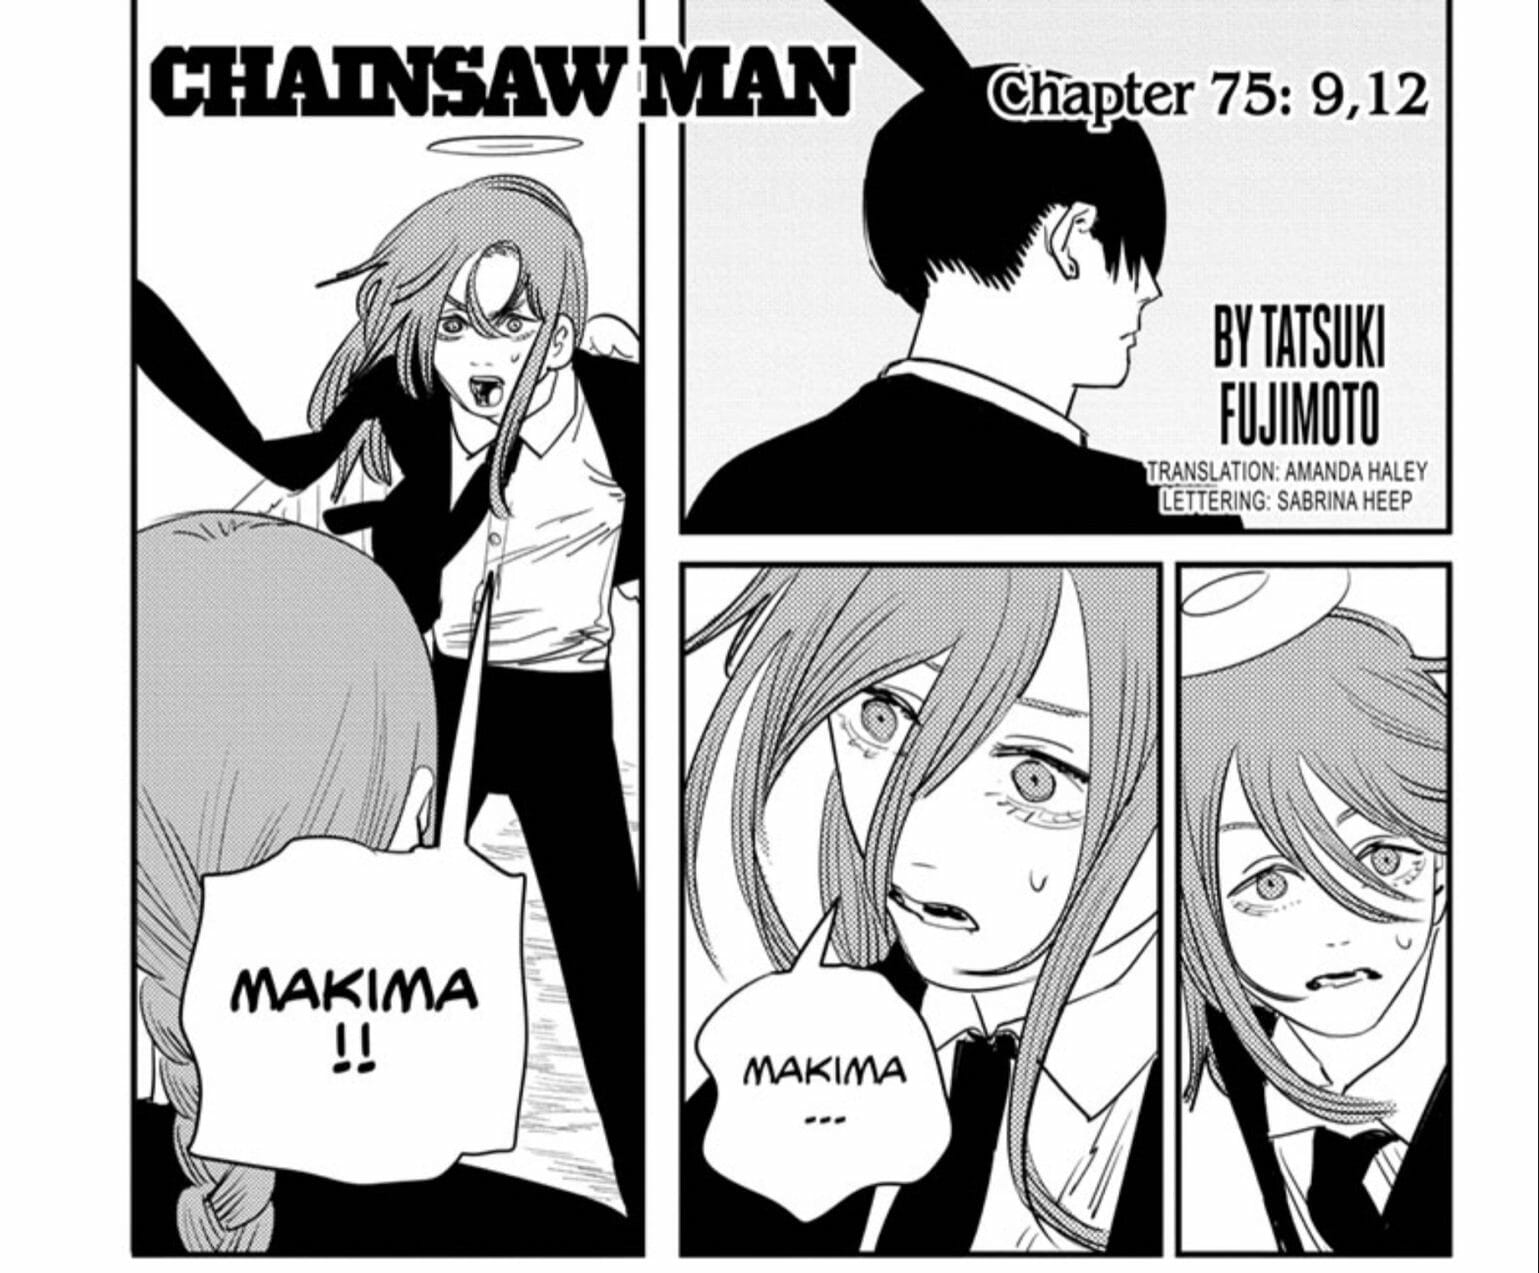 Chainsaw Man Episode 9, Makima's Powers